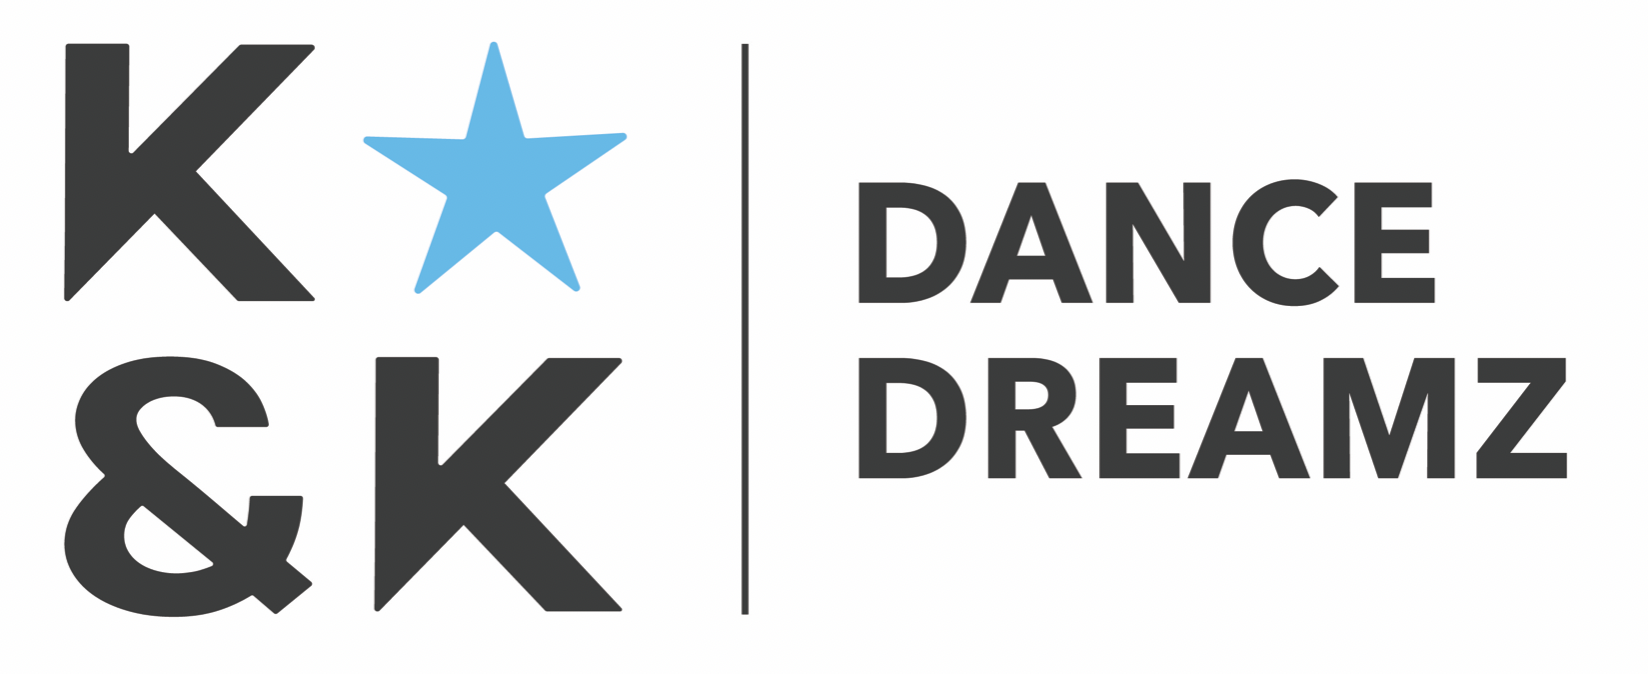 K&K Dance Dreamz